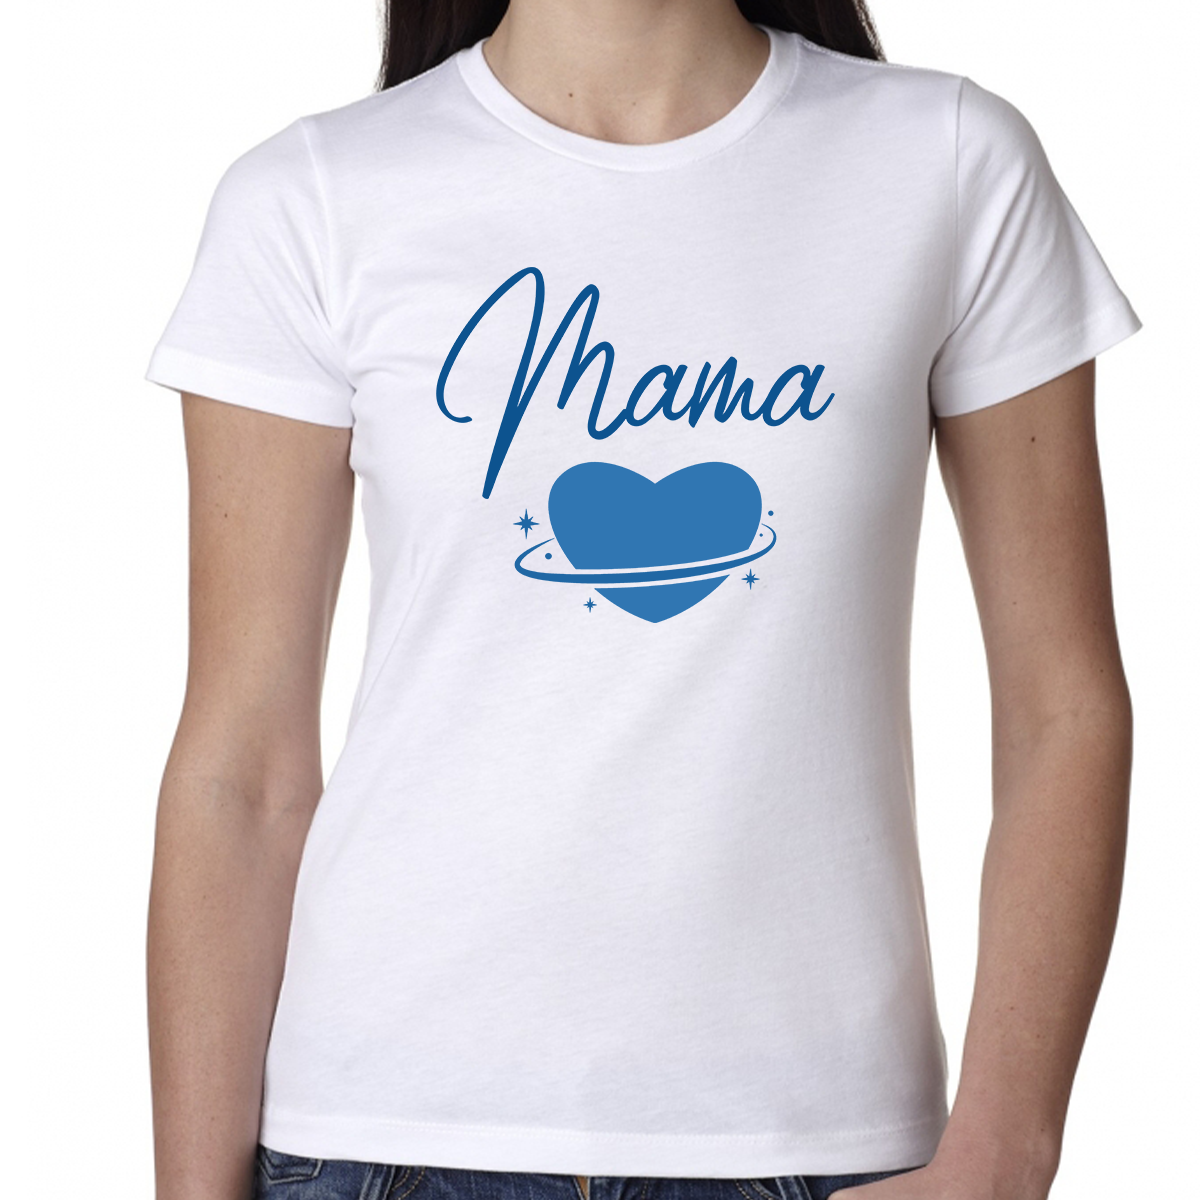 Mama Shirts for Women Heart Mothers Day Shirt Mom Shirt Mama Shirt